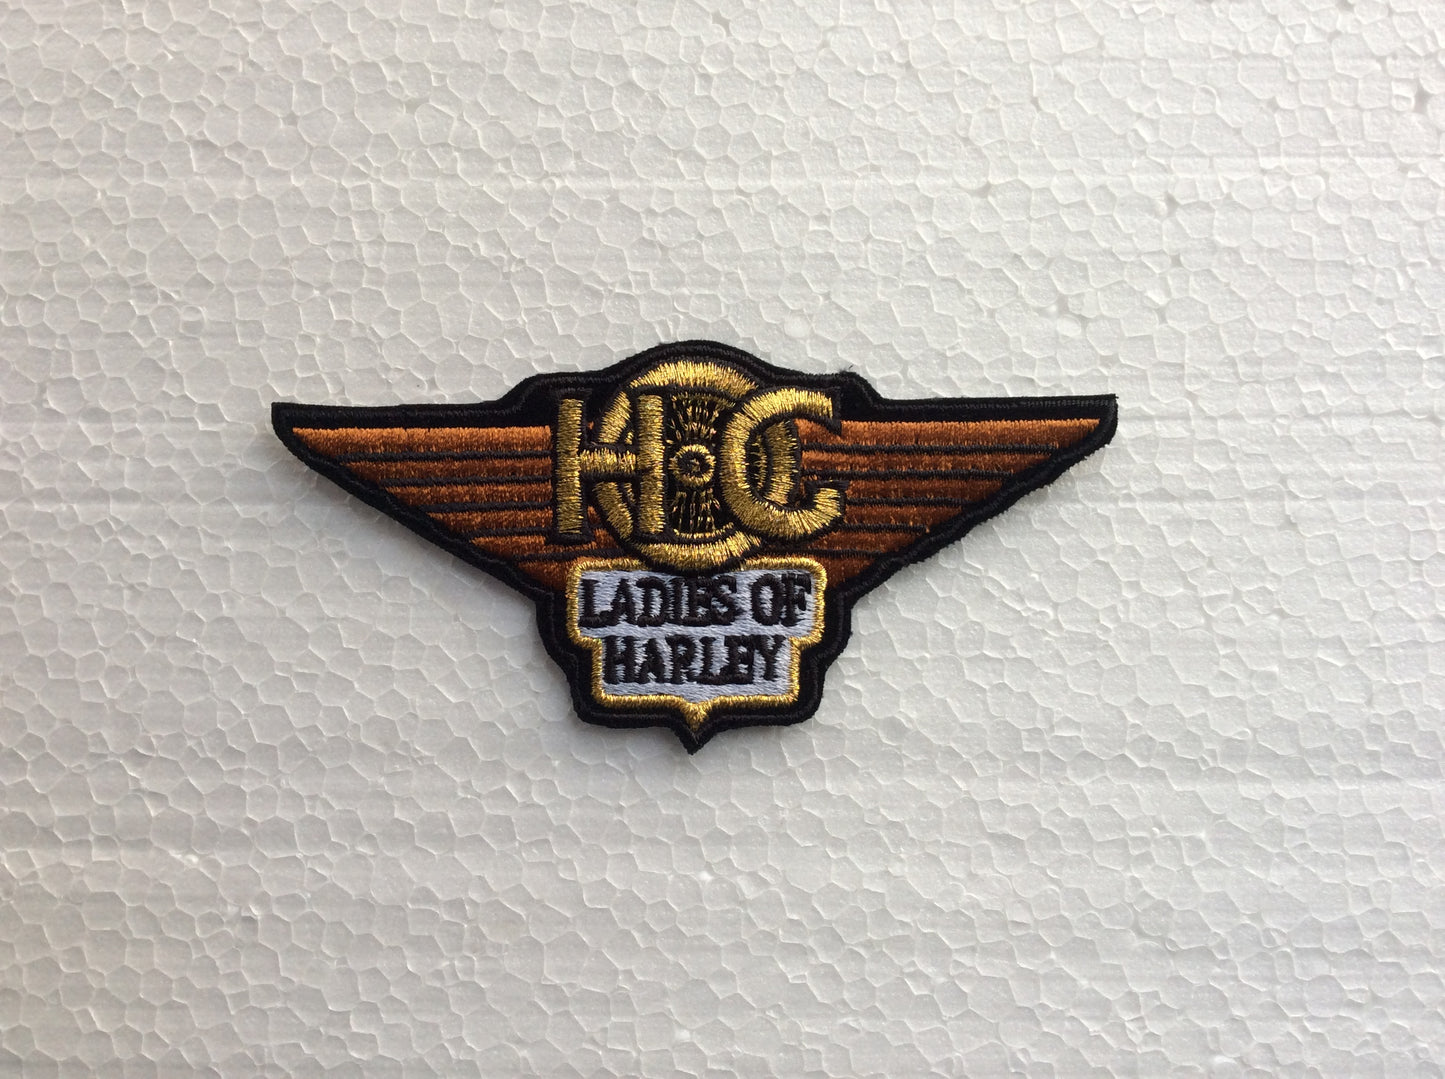 Piccola Patch Toppa Hog Ladies of Harley, Chapter e Bikers Harley Davidson